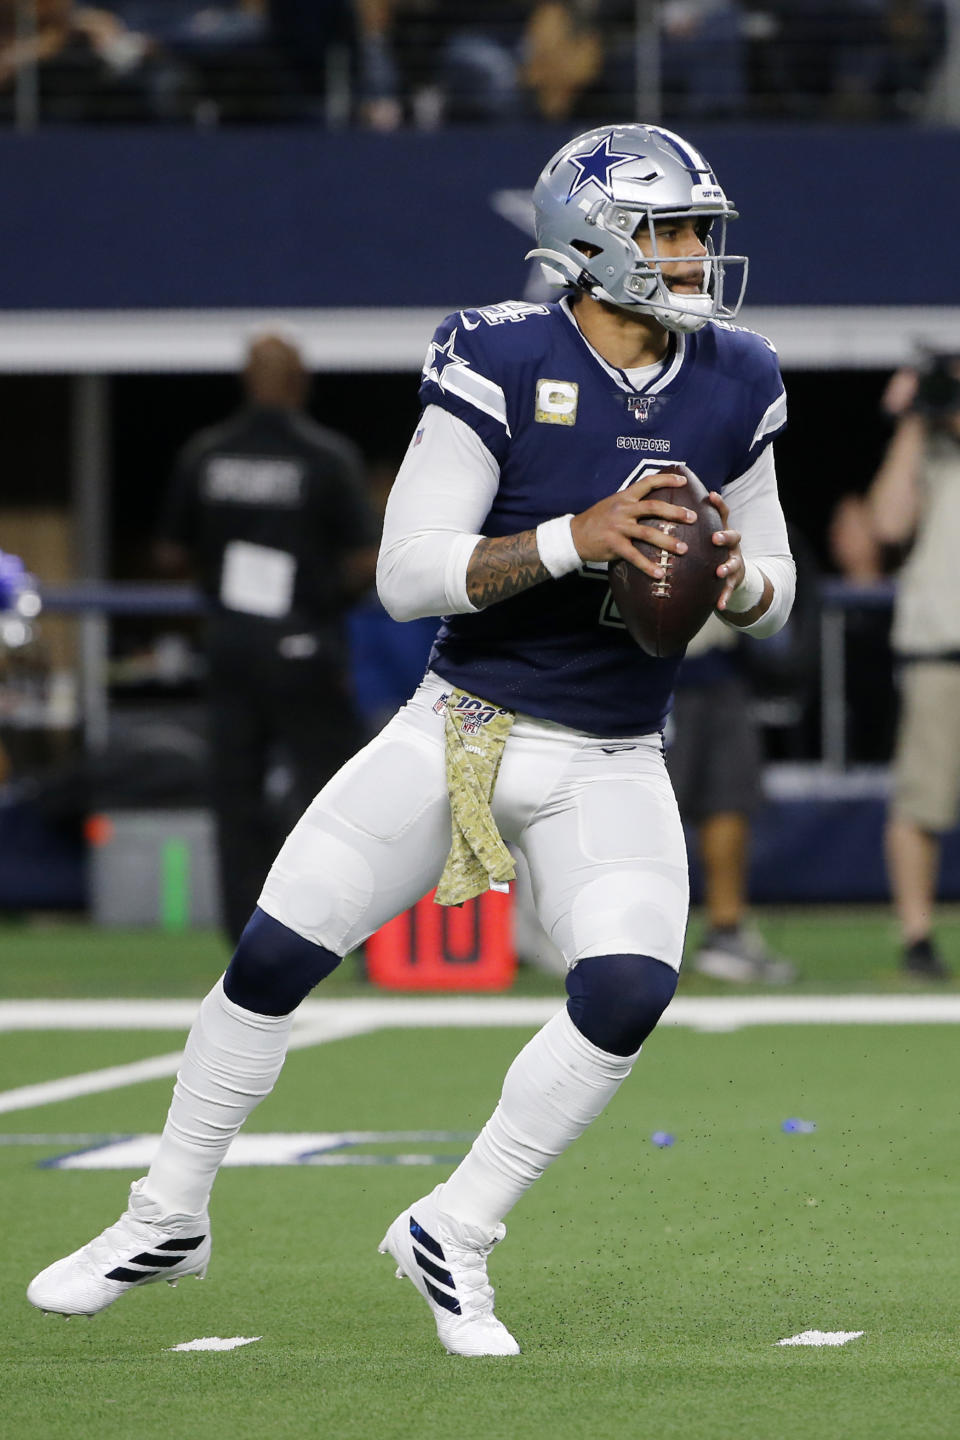 Dallas Cowboys quarterback Dak Prescott drops back to pass during the second half of the team's NFL football game against the Minnesota Vikings in Arlington, Texas, Sunday, Nov. 10, 2019. (AP Photo/Michael Ainsworth)